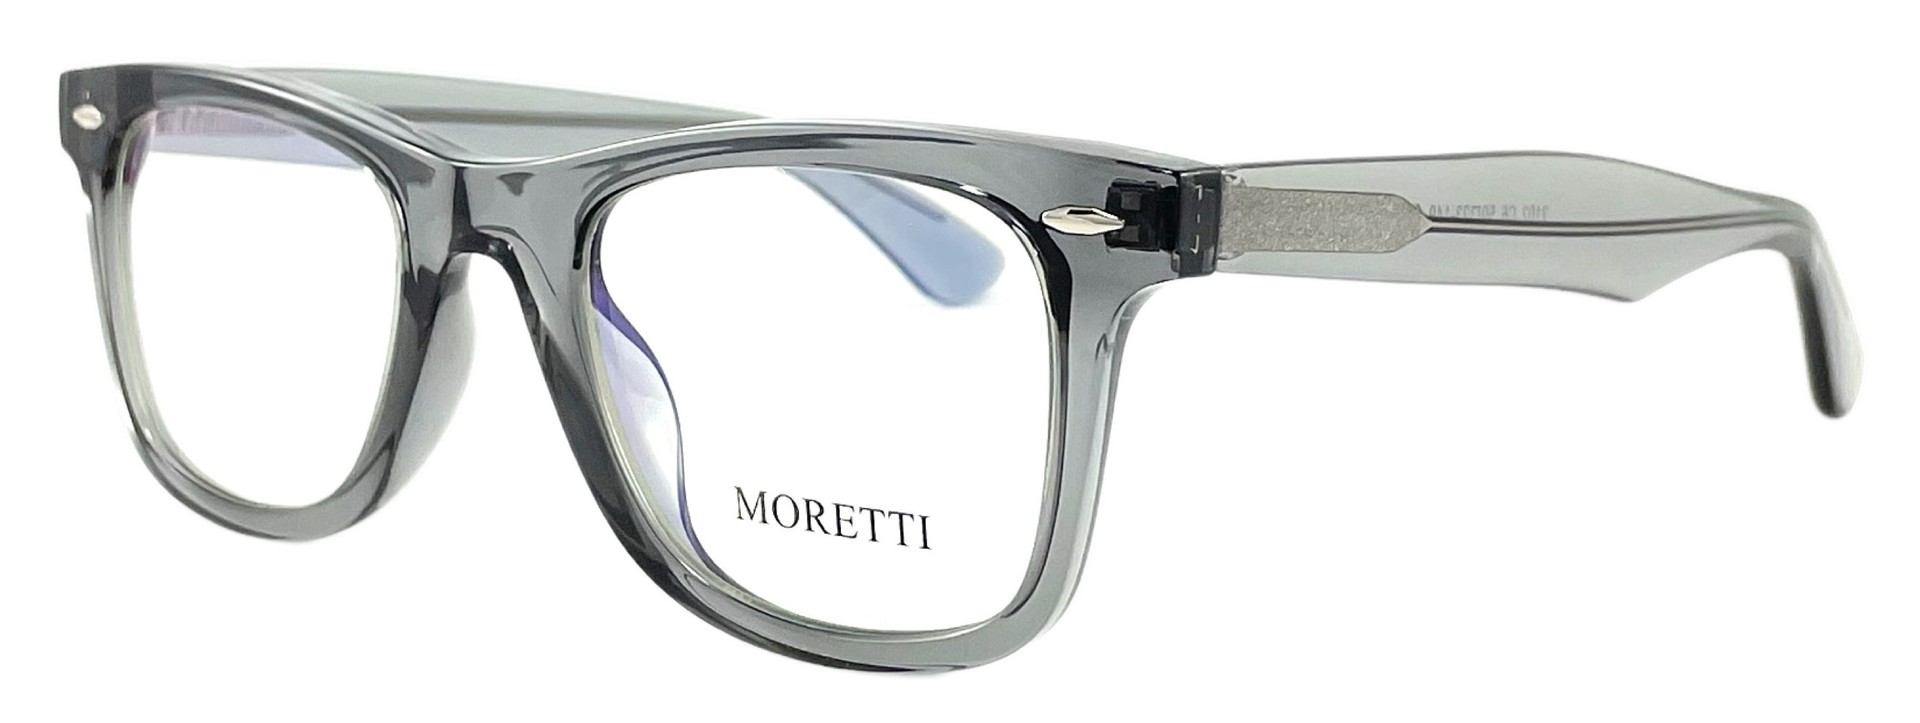 Moretti 2102 C6 2